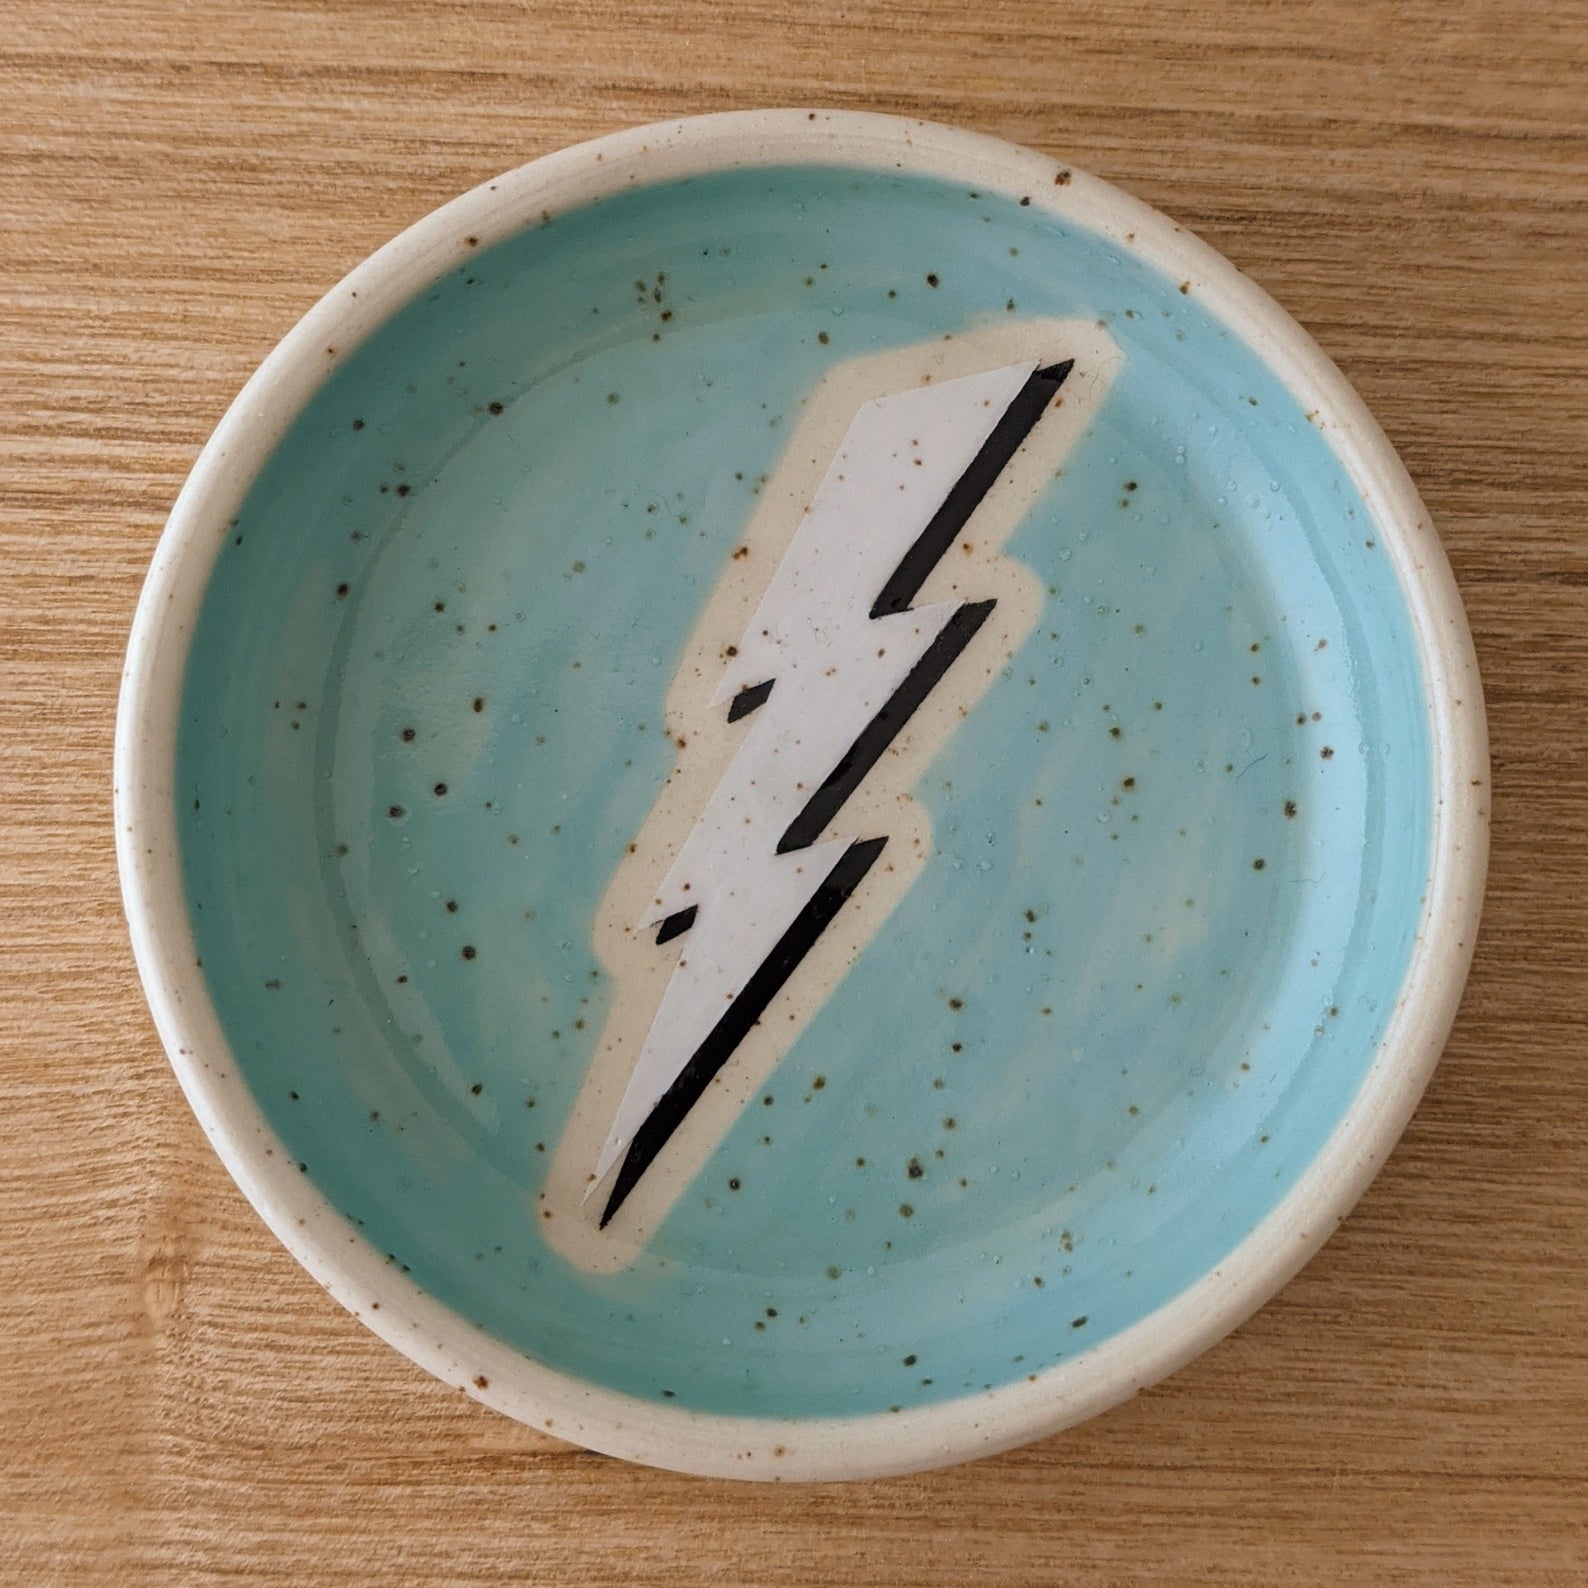 Small ceramic dish with lightning bolt